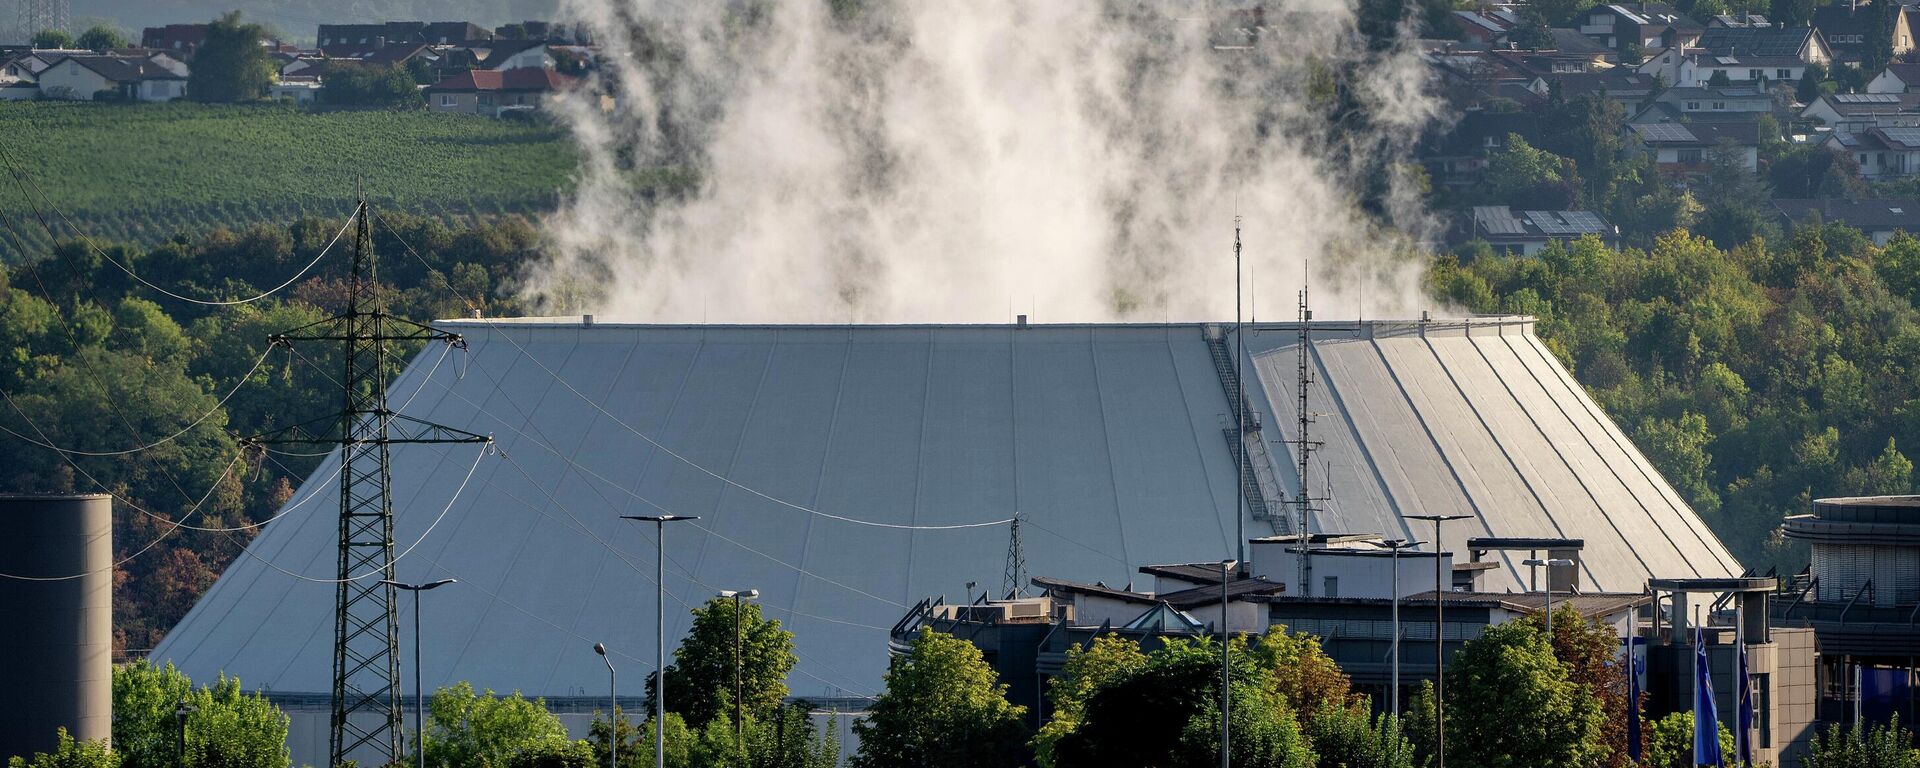 Smoke rises from the nuclear power plant of Nerckarwestheim in Neckarwestheim, Germany, on Aug. 22, 2022.  - Sputnik International, 1920, 25.10.2022